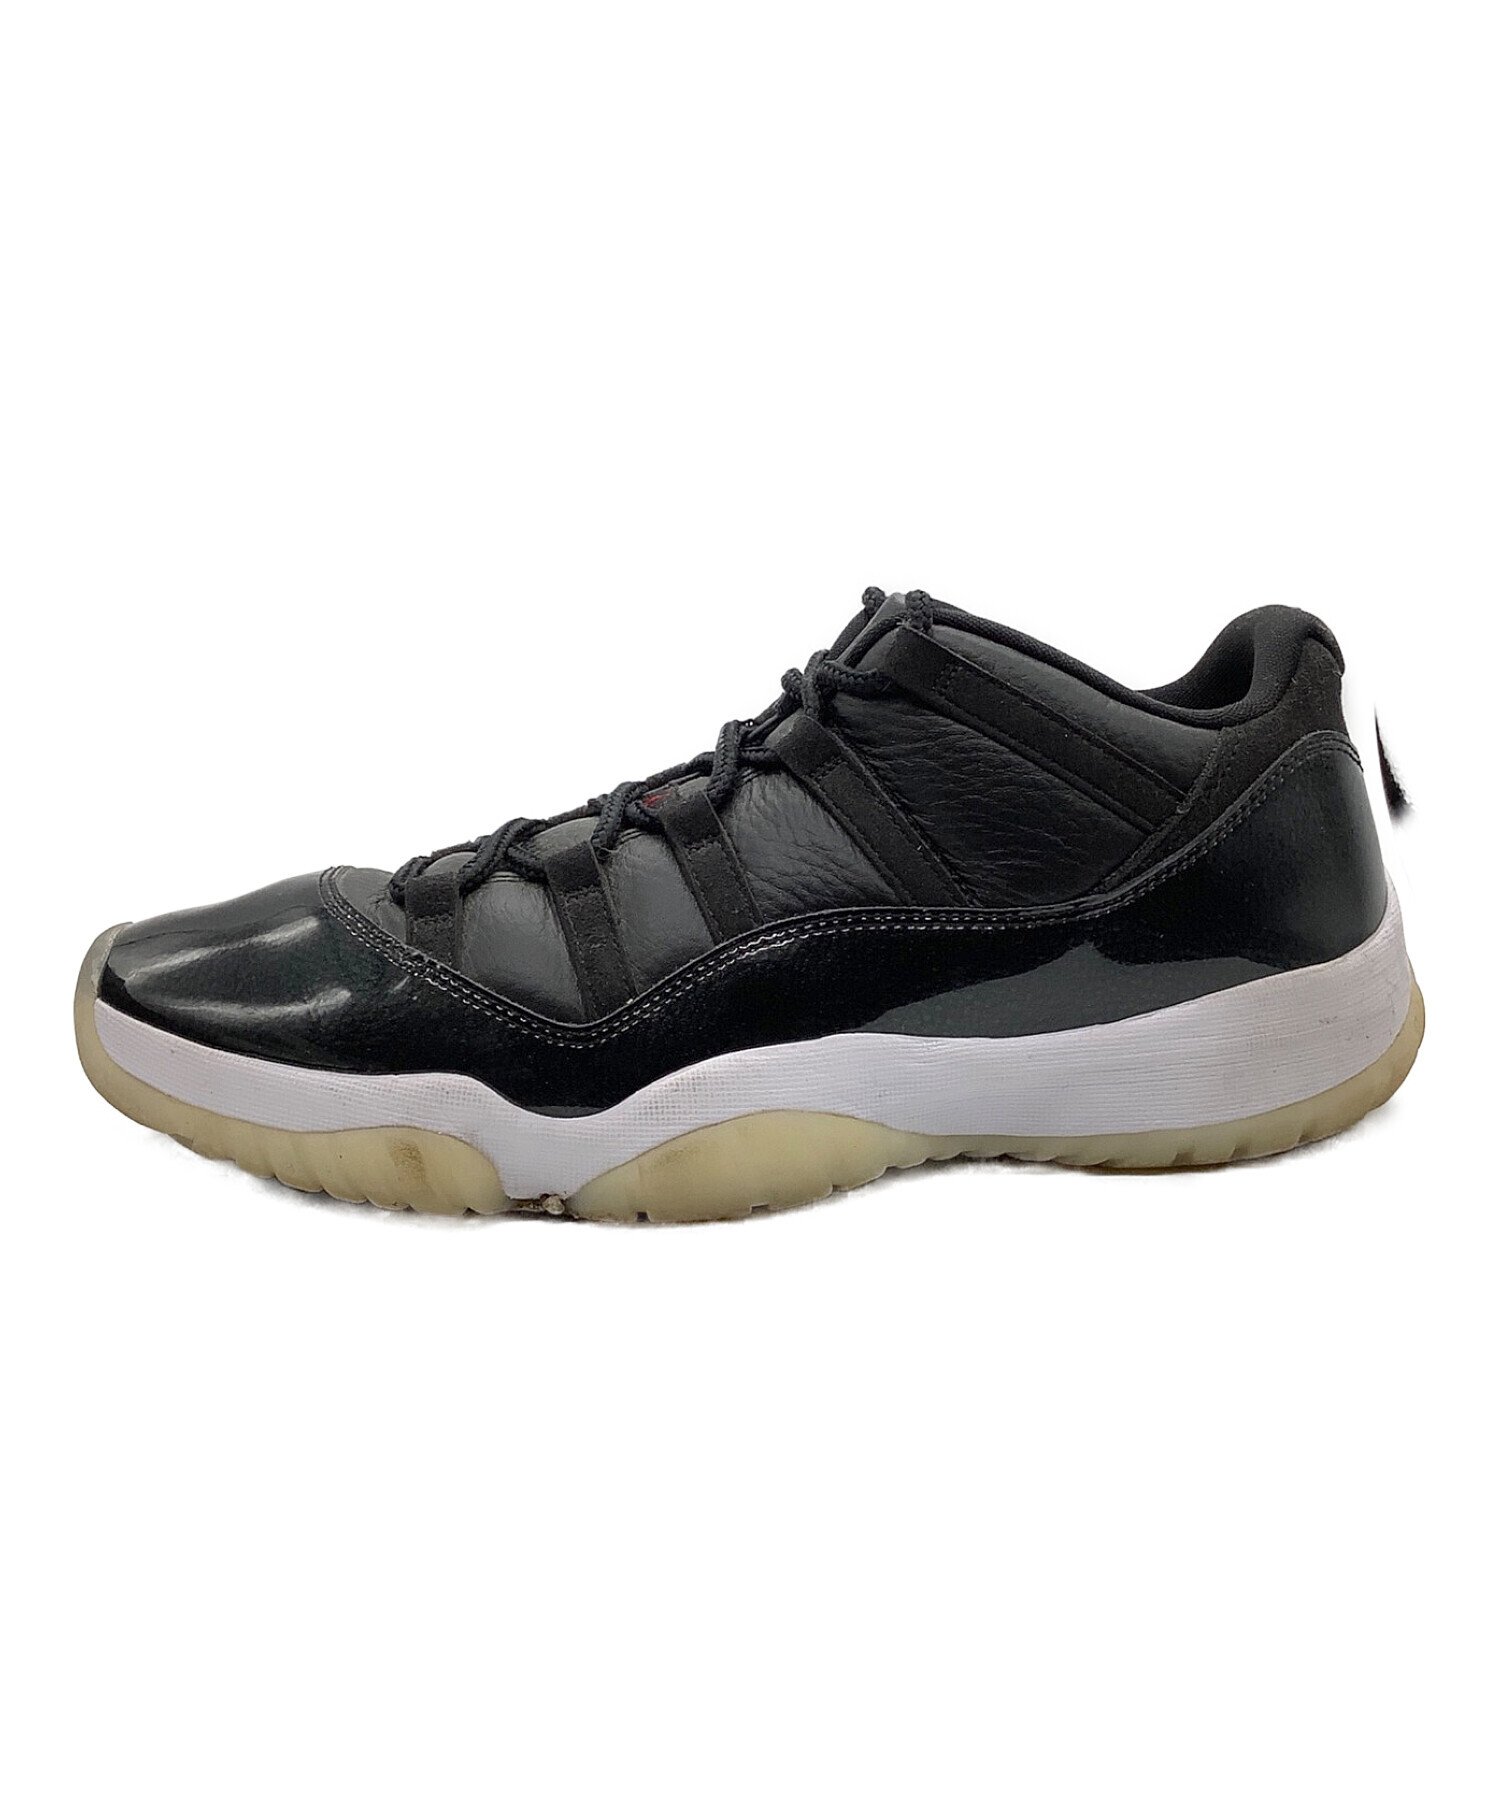 値下【新品】Jordan 11 Retro Low sneakers 30cm